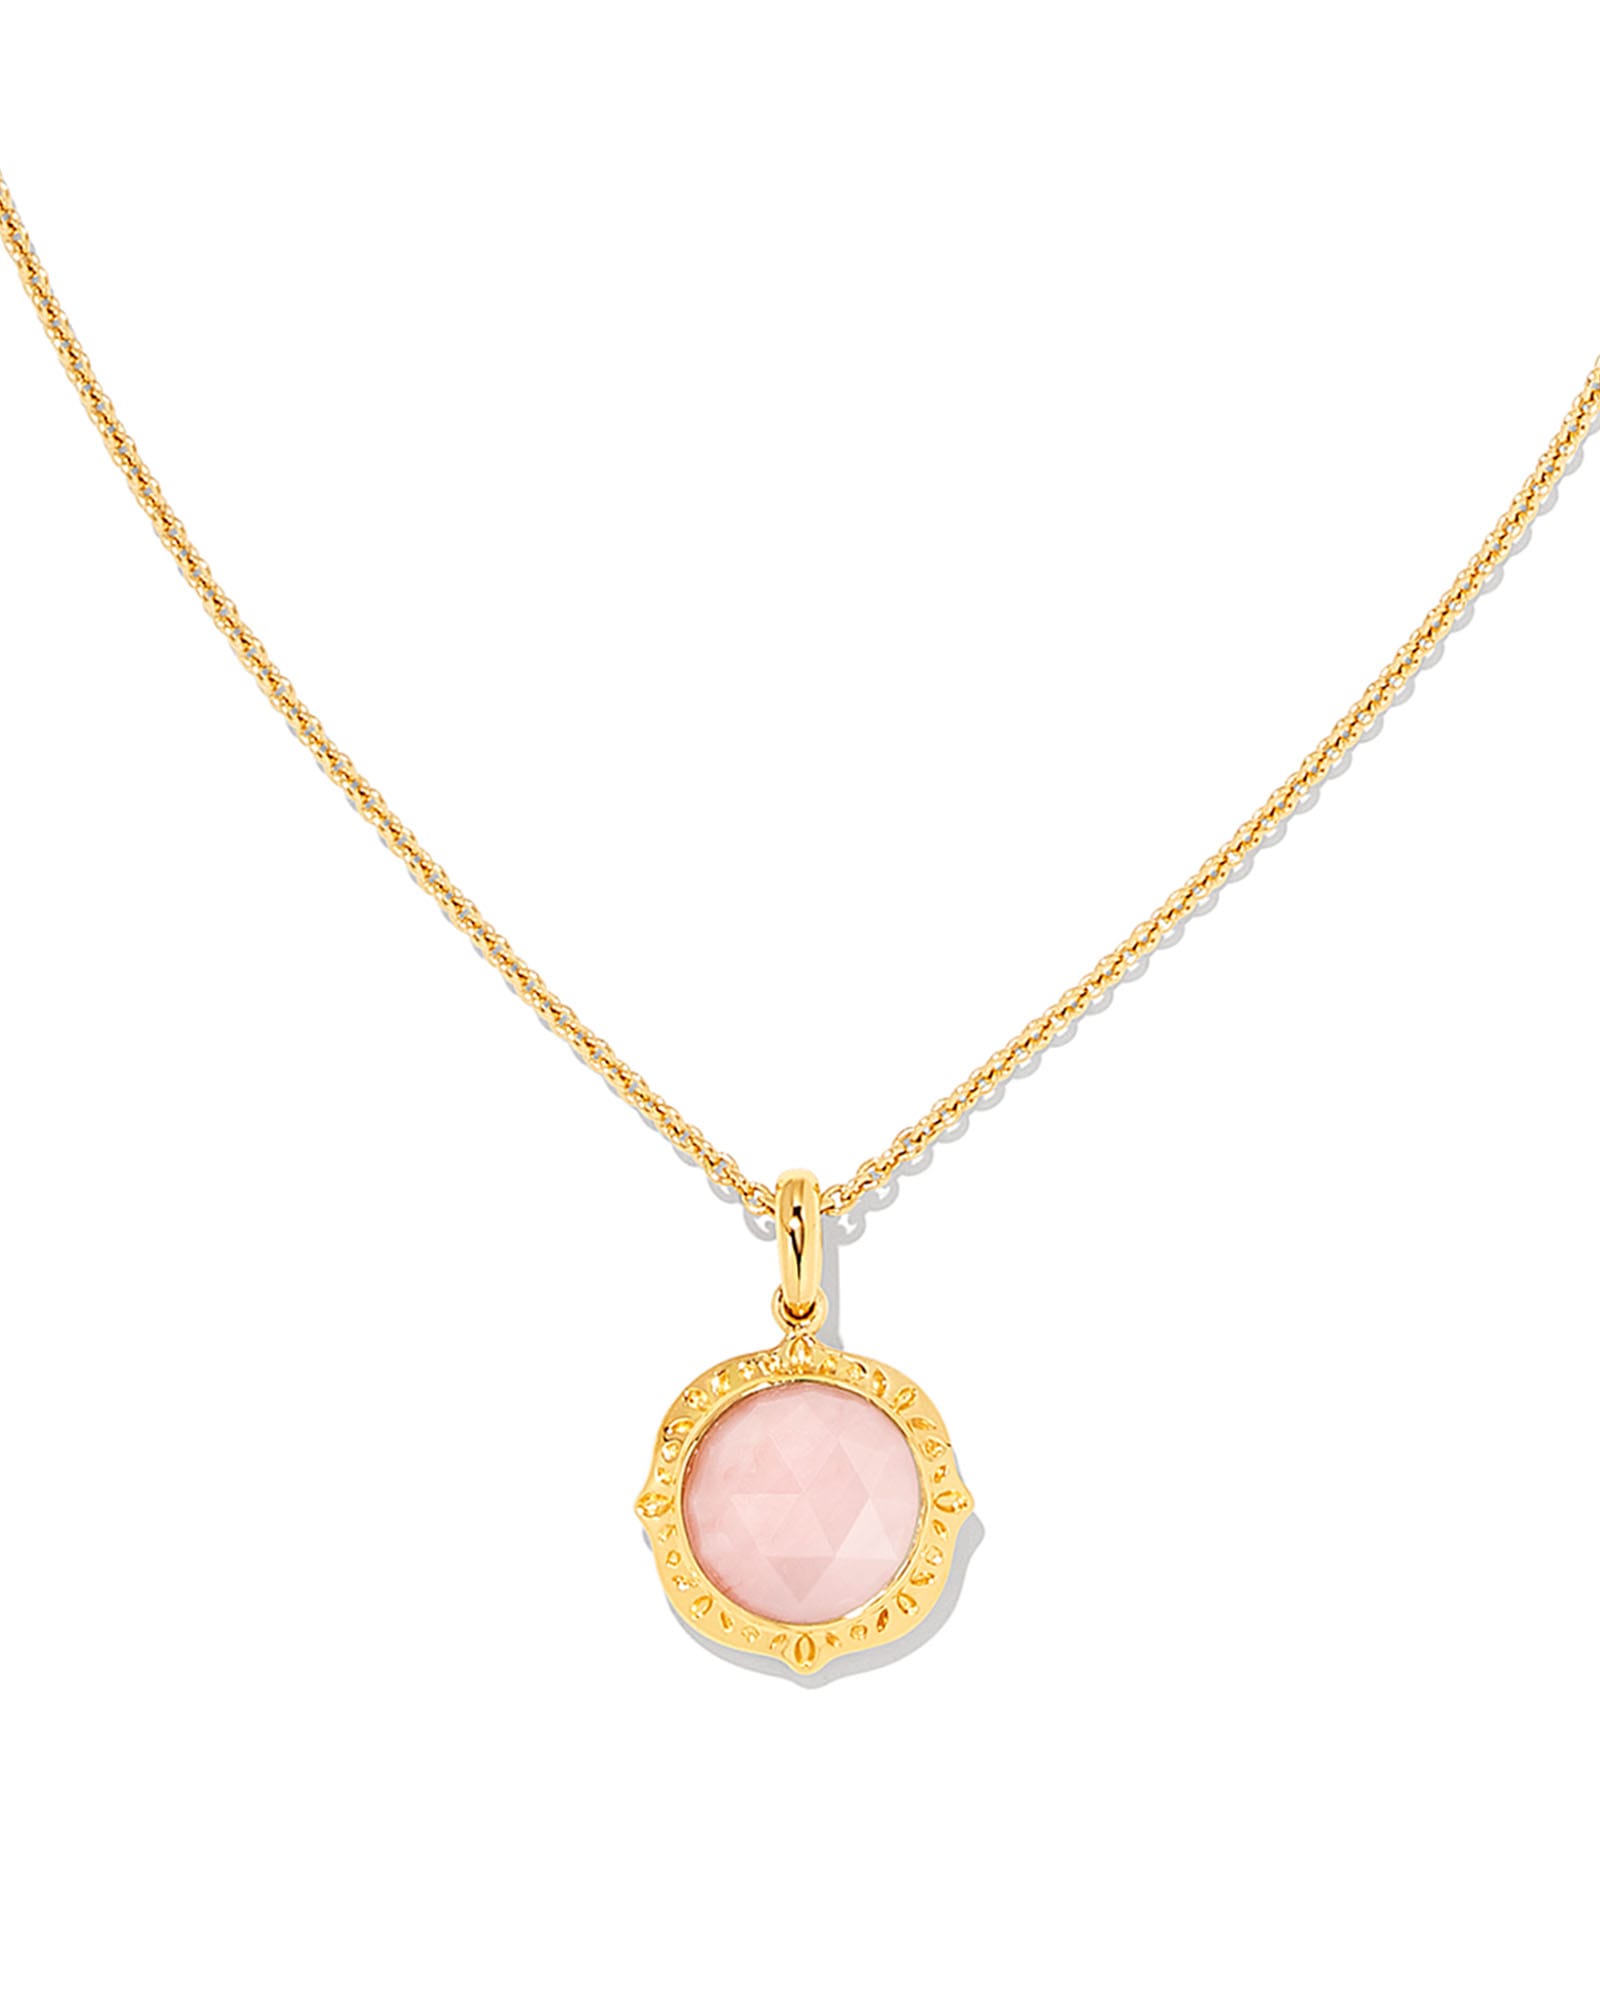 Kendra Scott Sage 18k Gold Vermeil Pendant Necklace in Pink Opal | Pink Opal Grade A